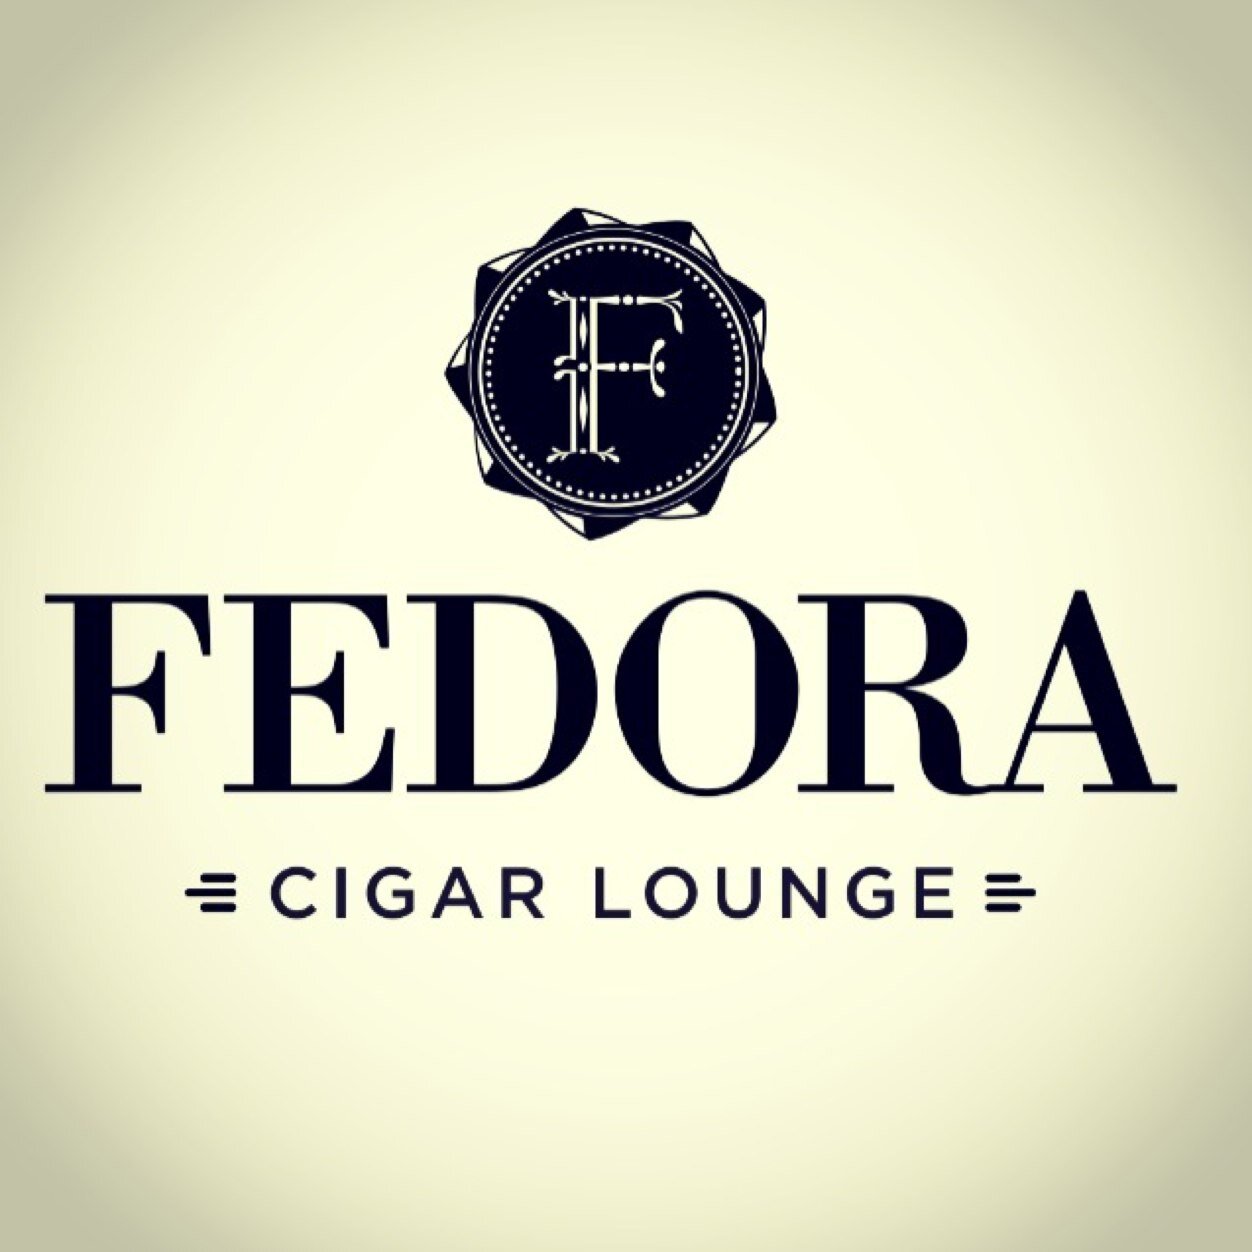 Cigar Lounge coming soon